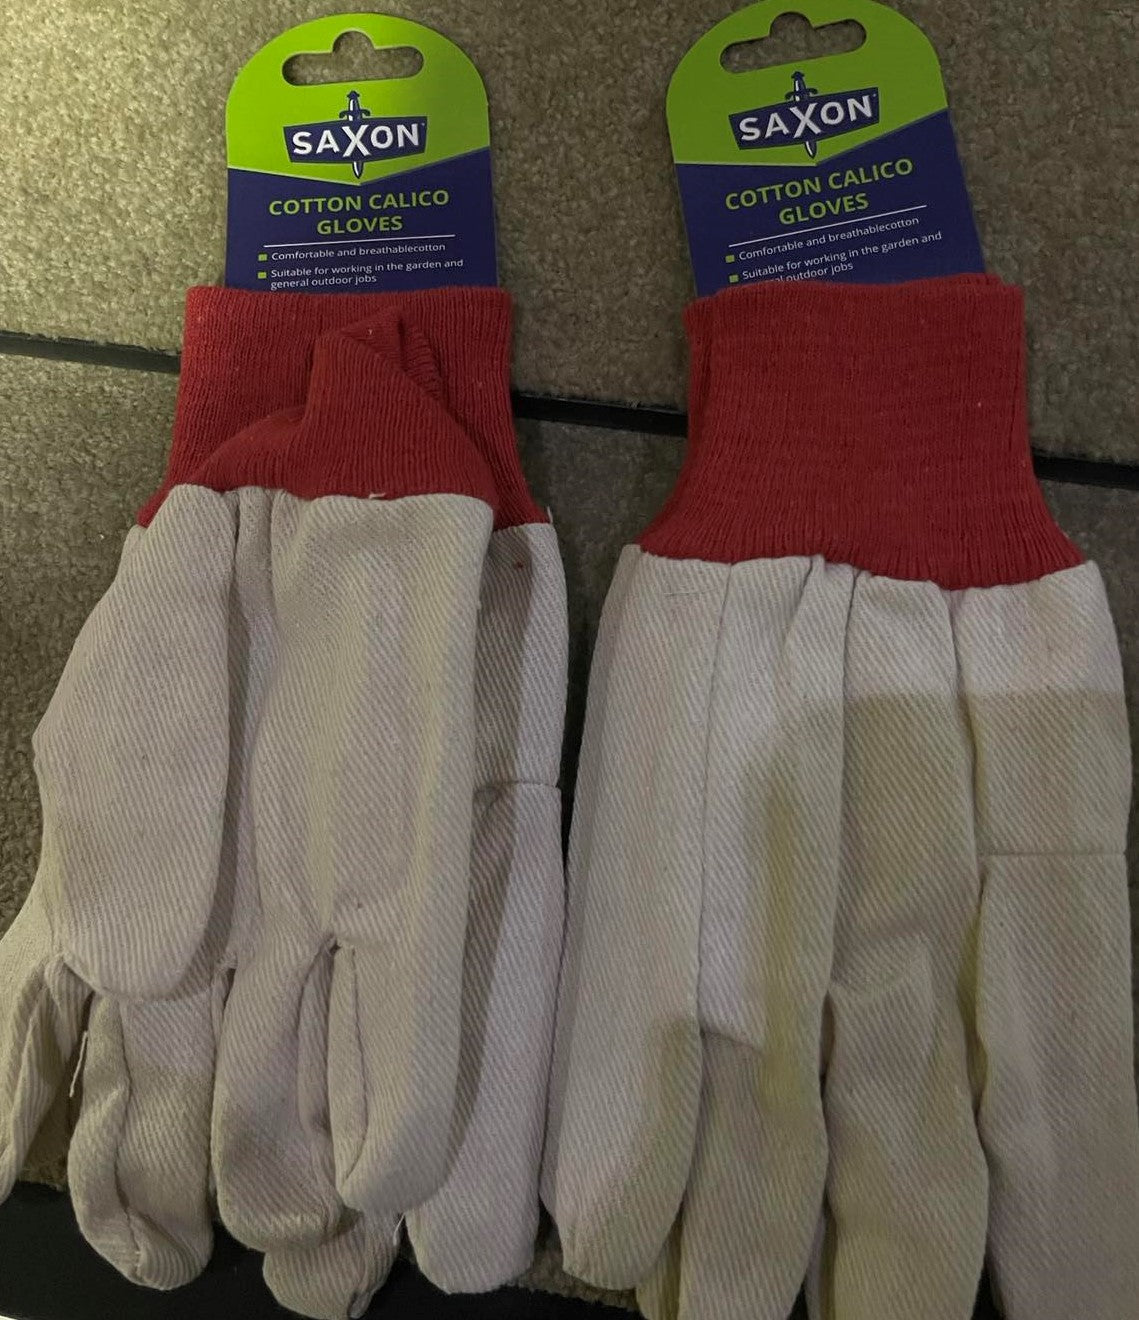 Garden - Saxon Cotton Calico Gardening Gloves